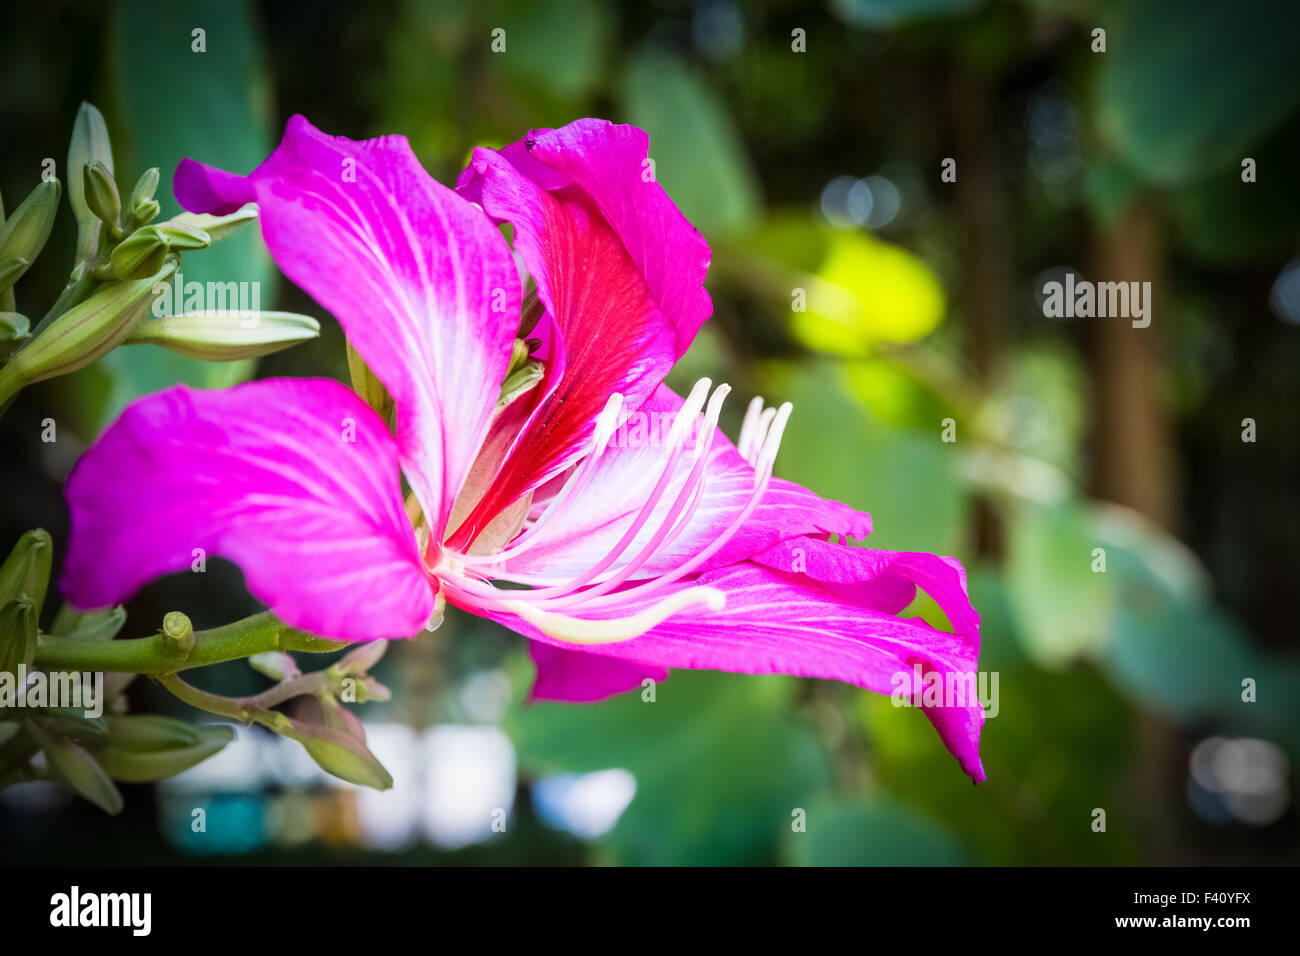 bauhinia flower closeup Stock Photo